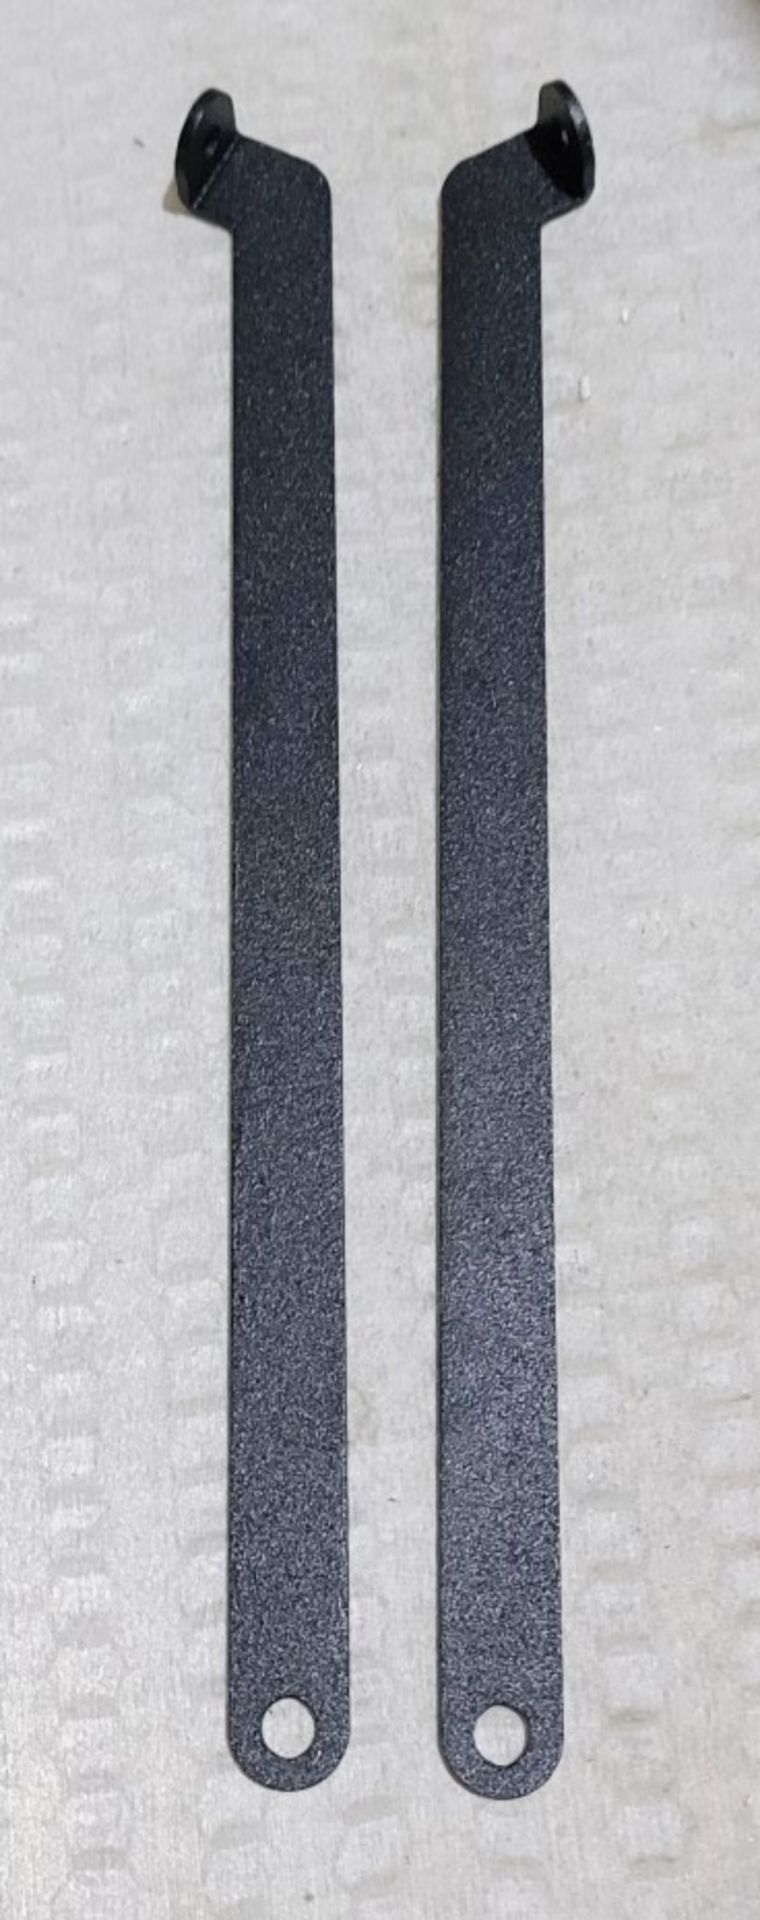 1 x WOOOD 'Gyan Legplank' Light Oak Shelf With Black Metal Braces 80cm - Image 6 of 7